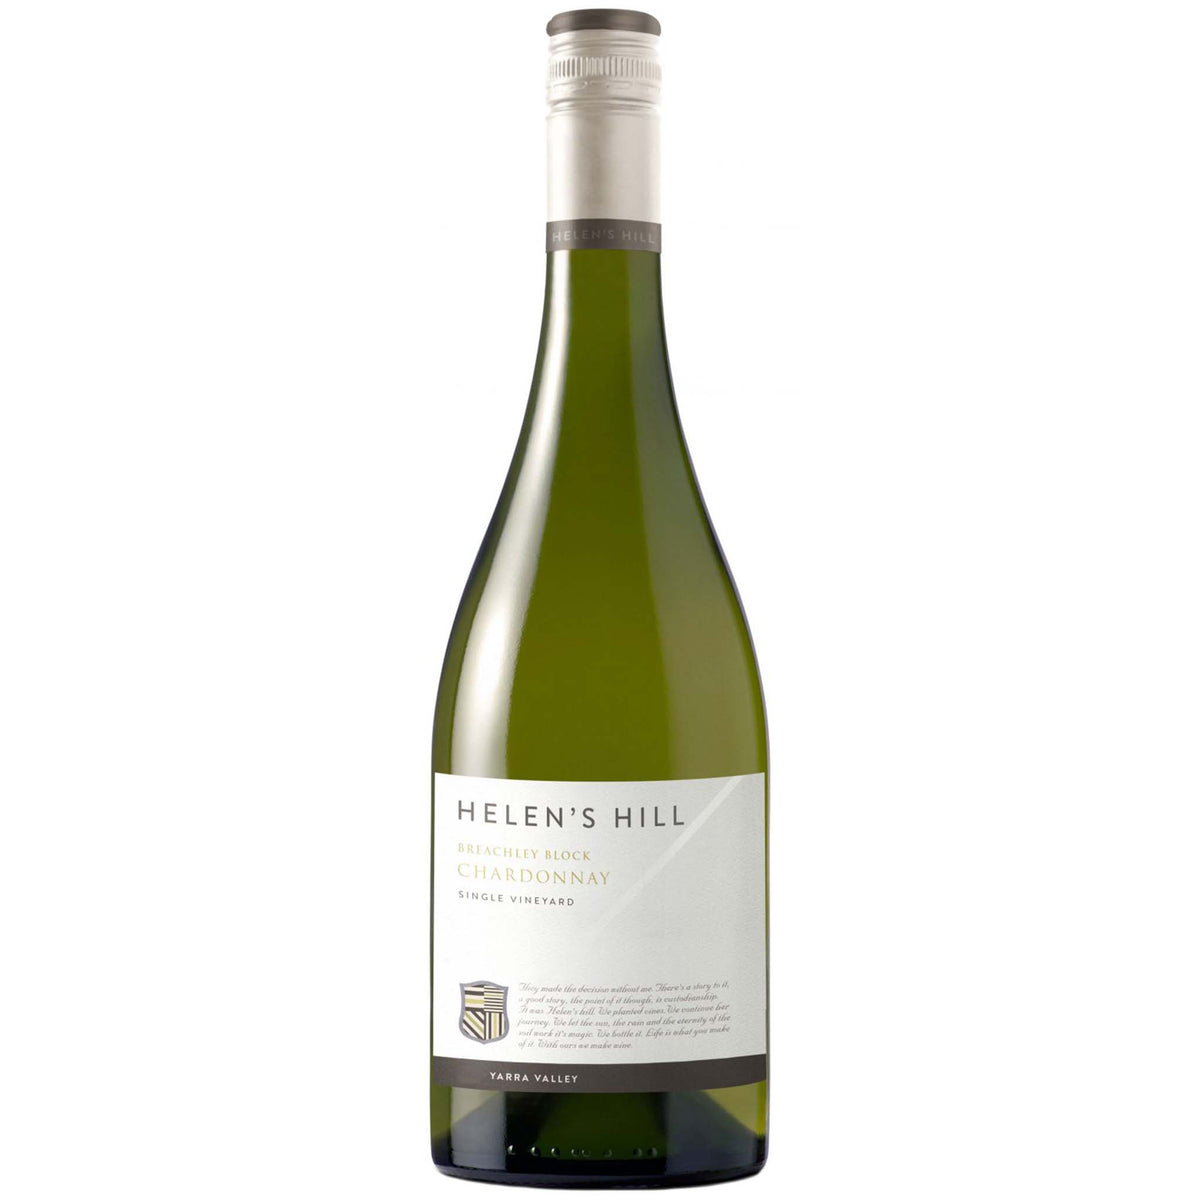 Helen's-Hill-Estate-Breachley-Block-Single-Vineyard-Chardonnay-2020